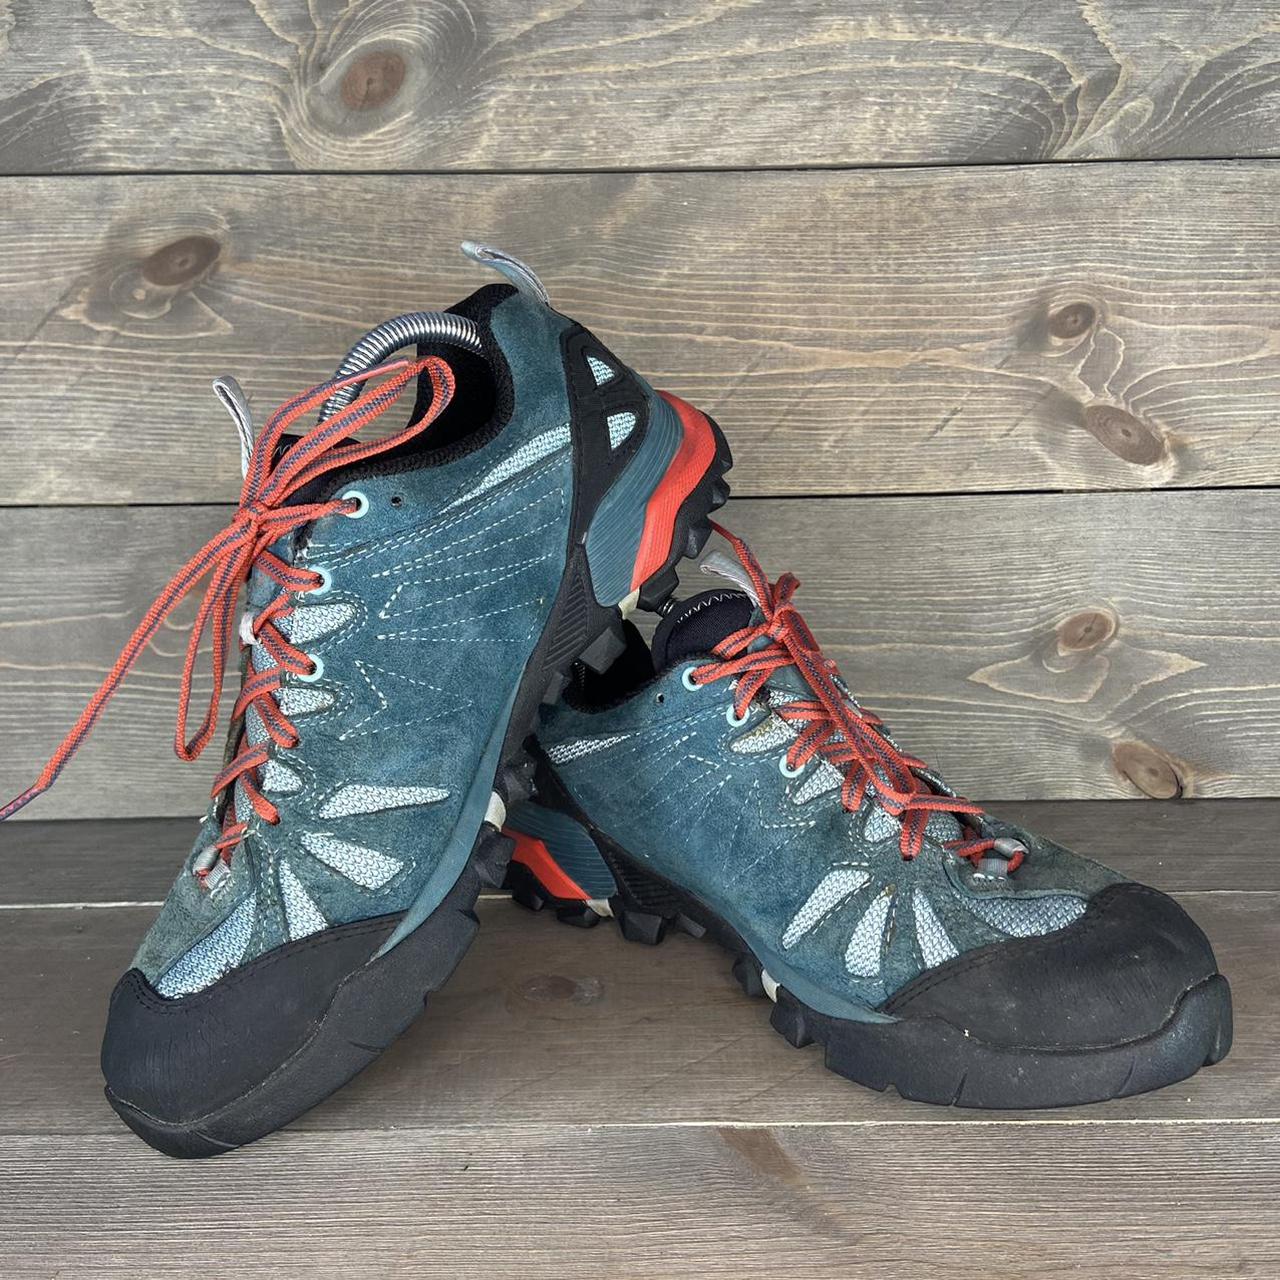 Product Image 2 - Merrell Capra hiking shoes

Women’s size